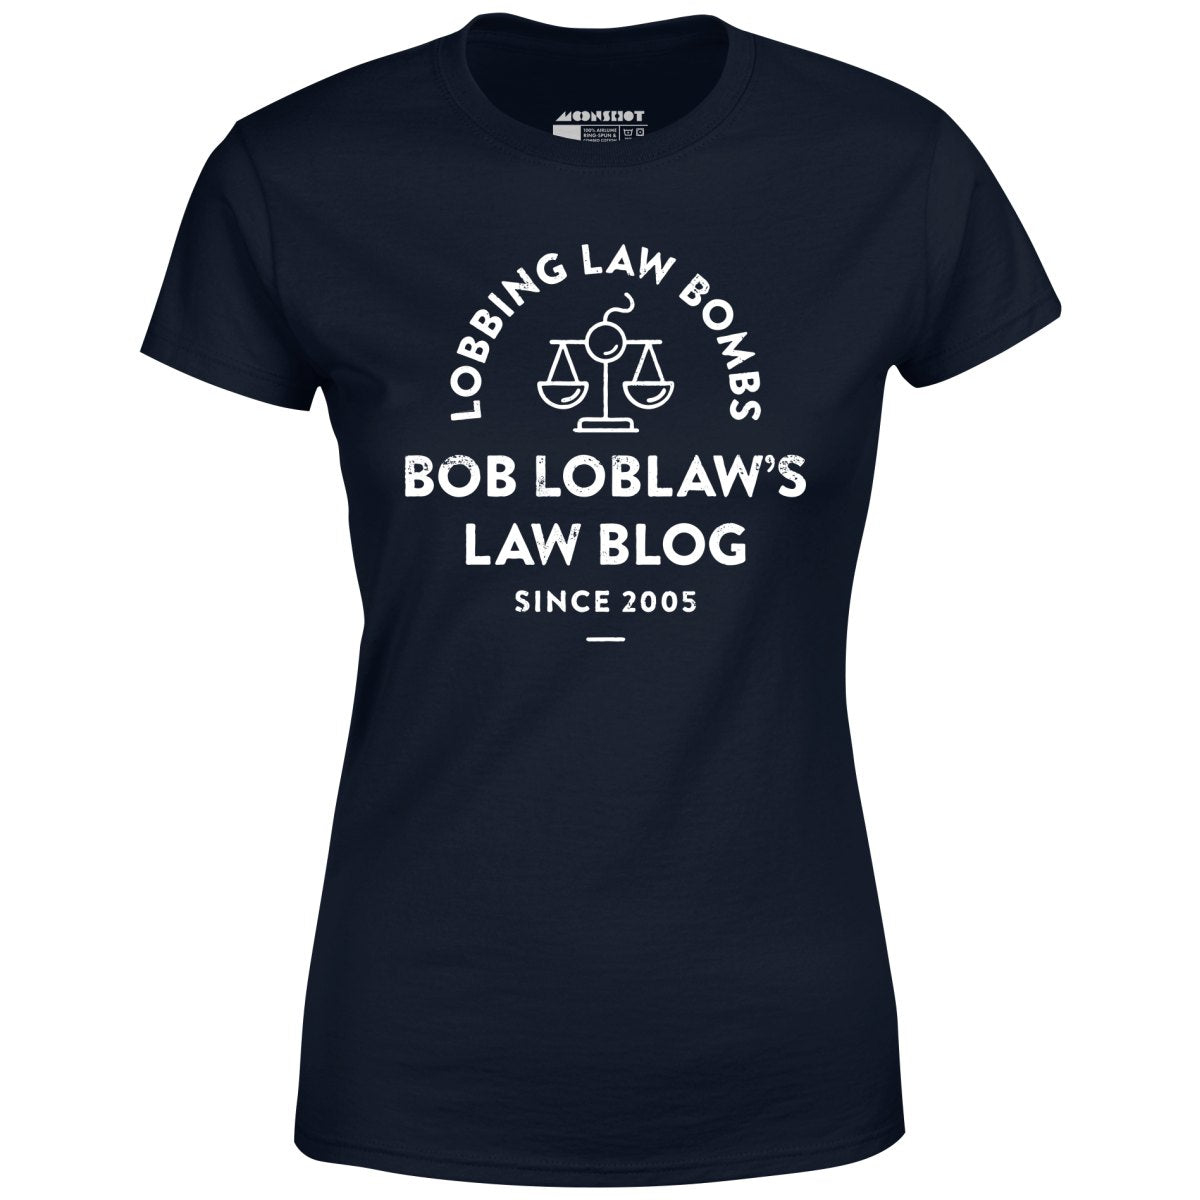 Bob Loblaw's Law Blog - Women's T-Shirt